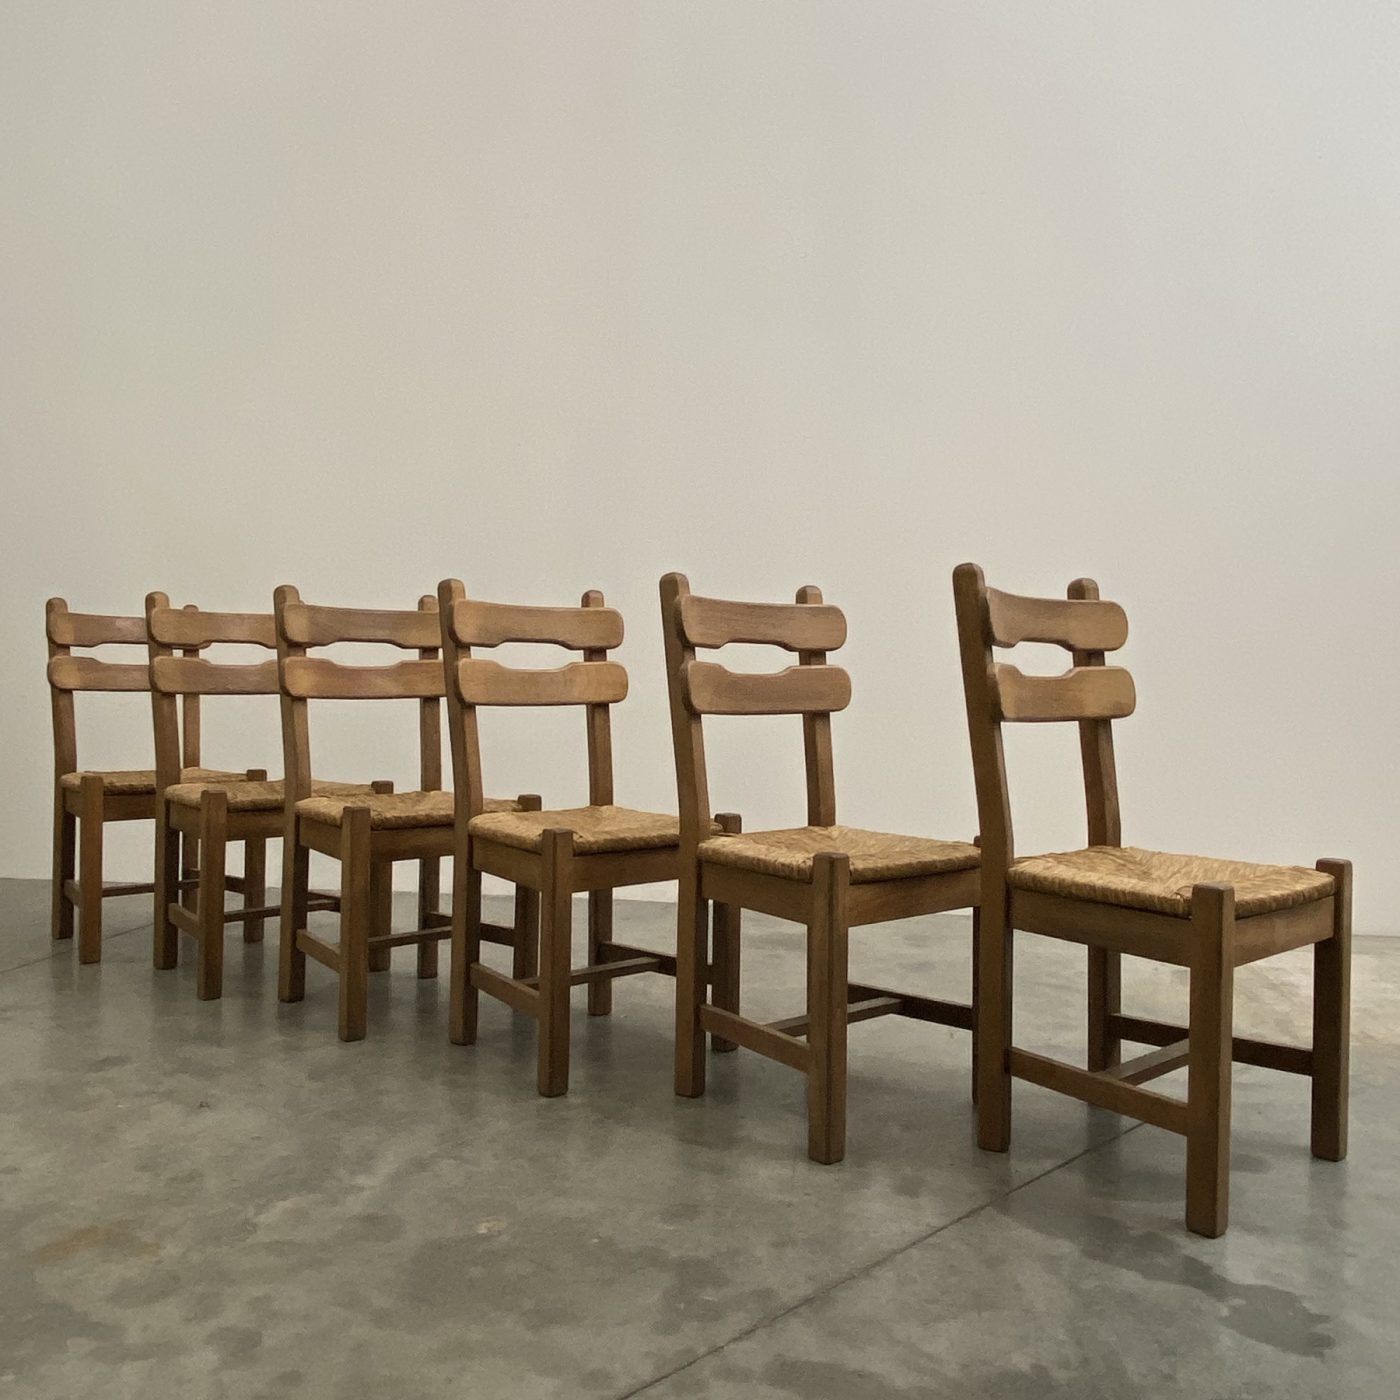 objet-vagabond-brutalist-chairs0006